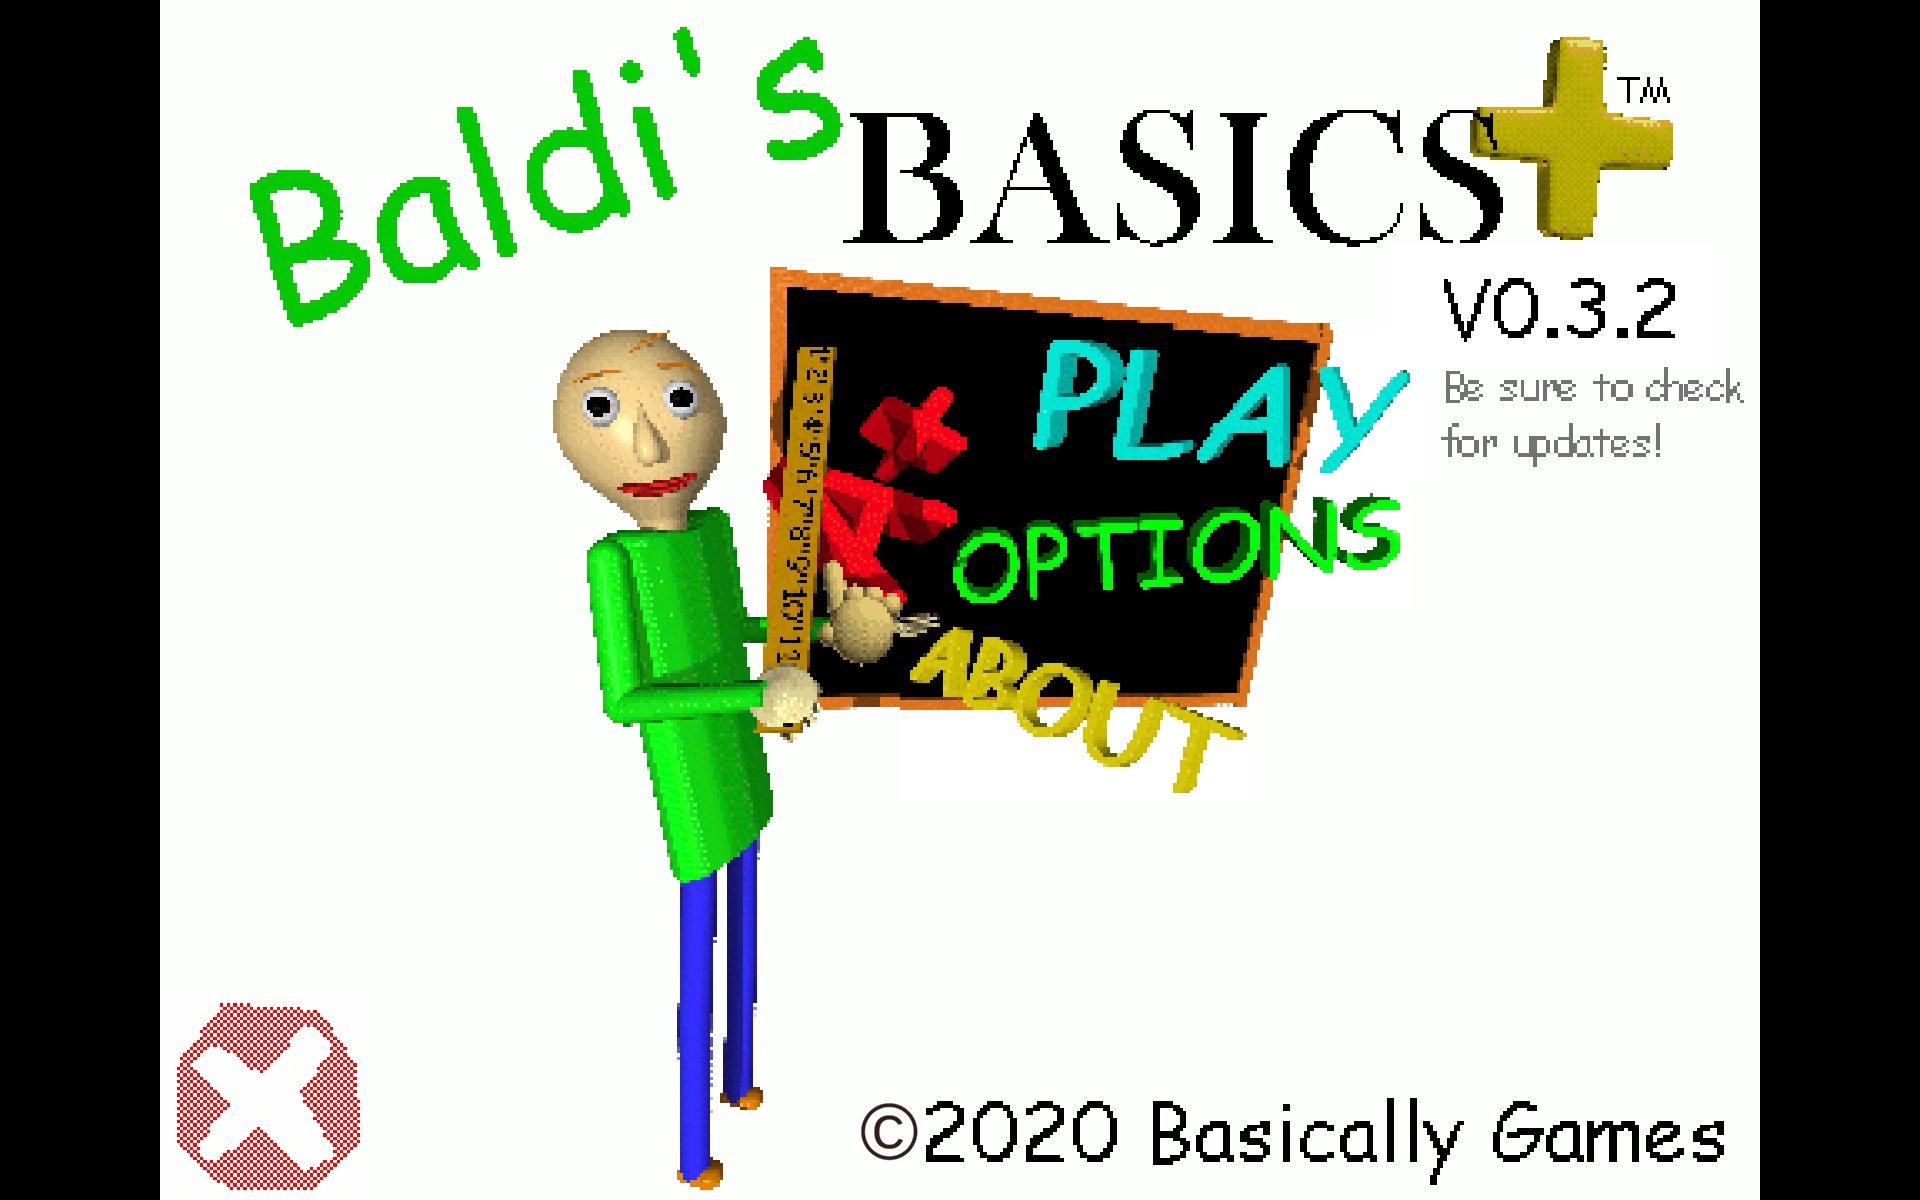 Baldi Basics Plus On Android by LMsonicboy8269